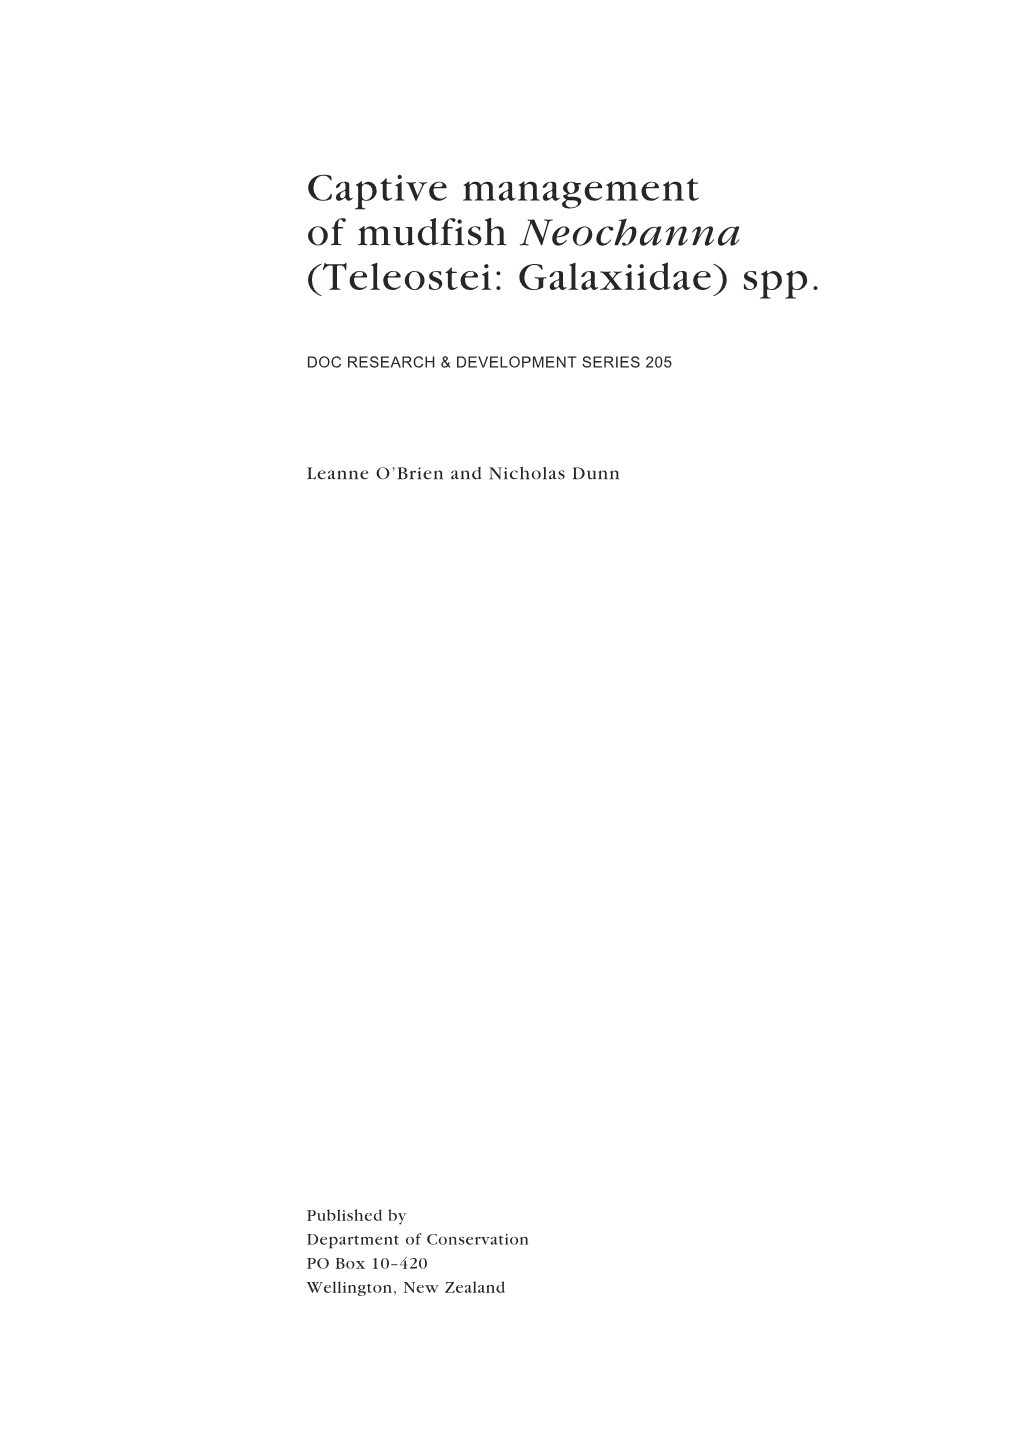 Captive Management of Mudfish Neochanna (Teleostei: Galaxiidae) Spp